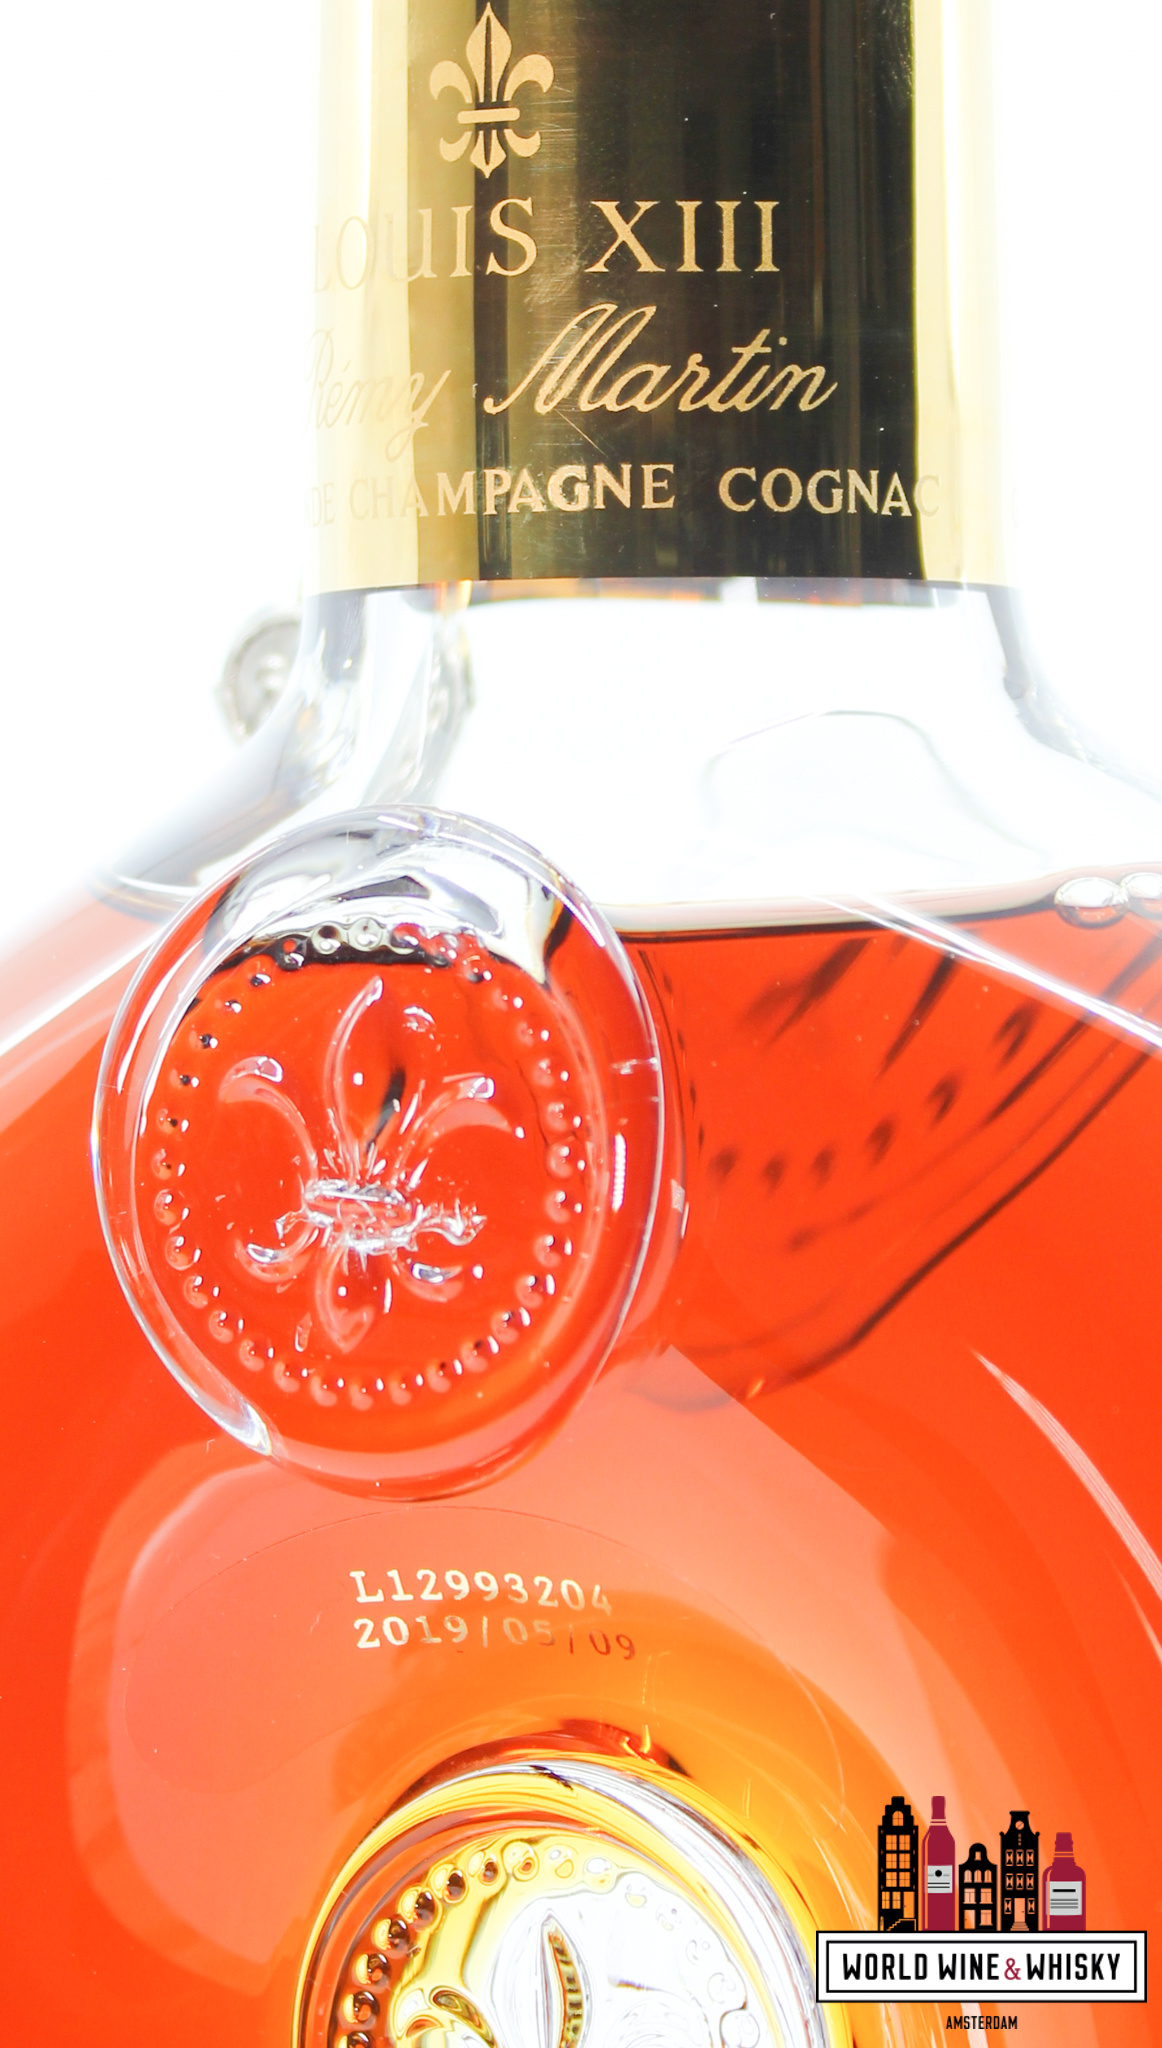 Rémy Martin Remy Martin Louis XIII - Grande Champagne Cognac Baccarat Decanter 40%